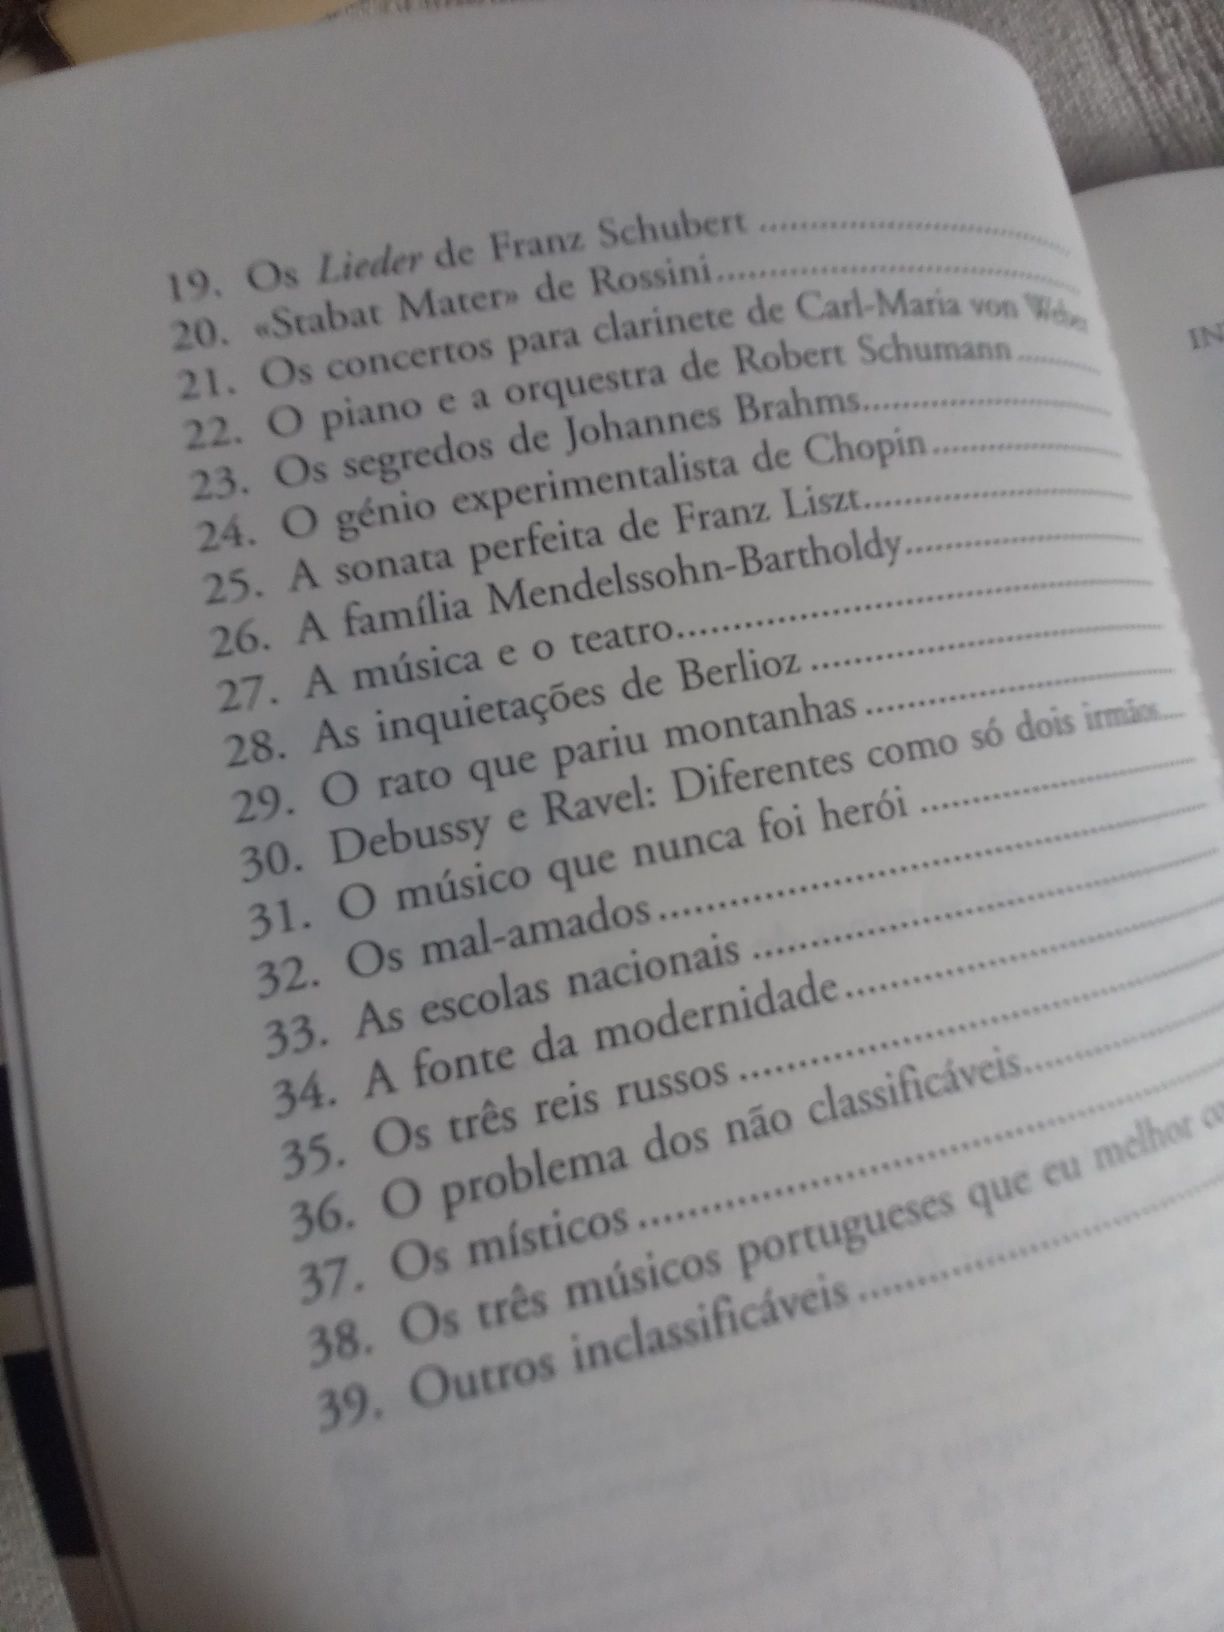 Livro do maestro António Victorino de Almeida